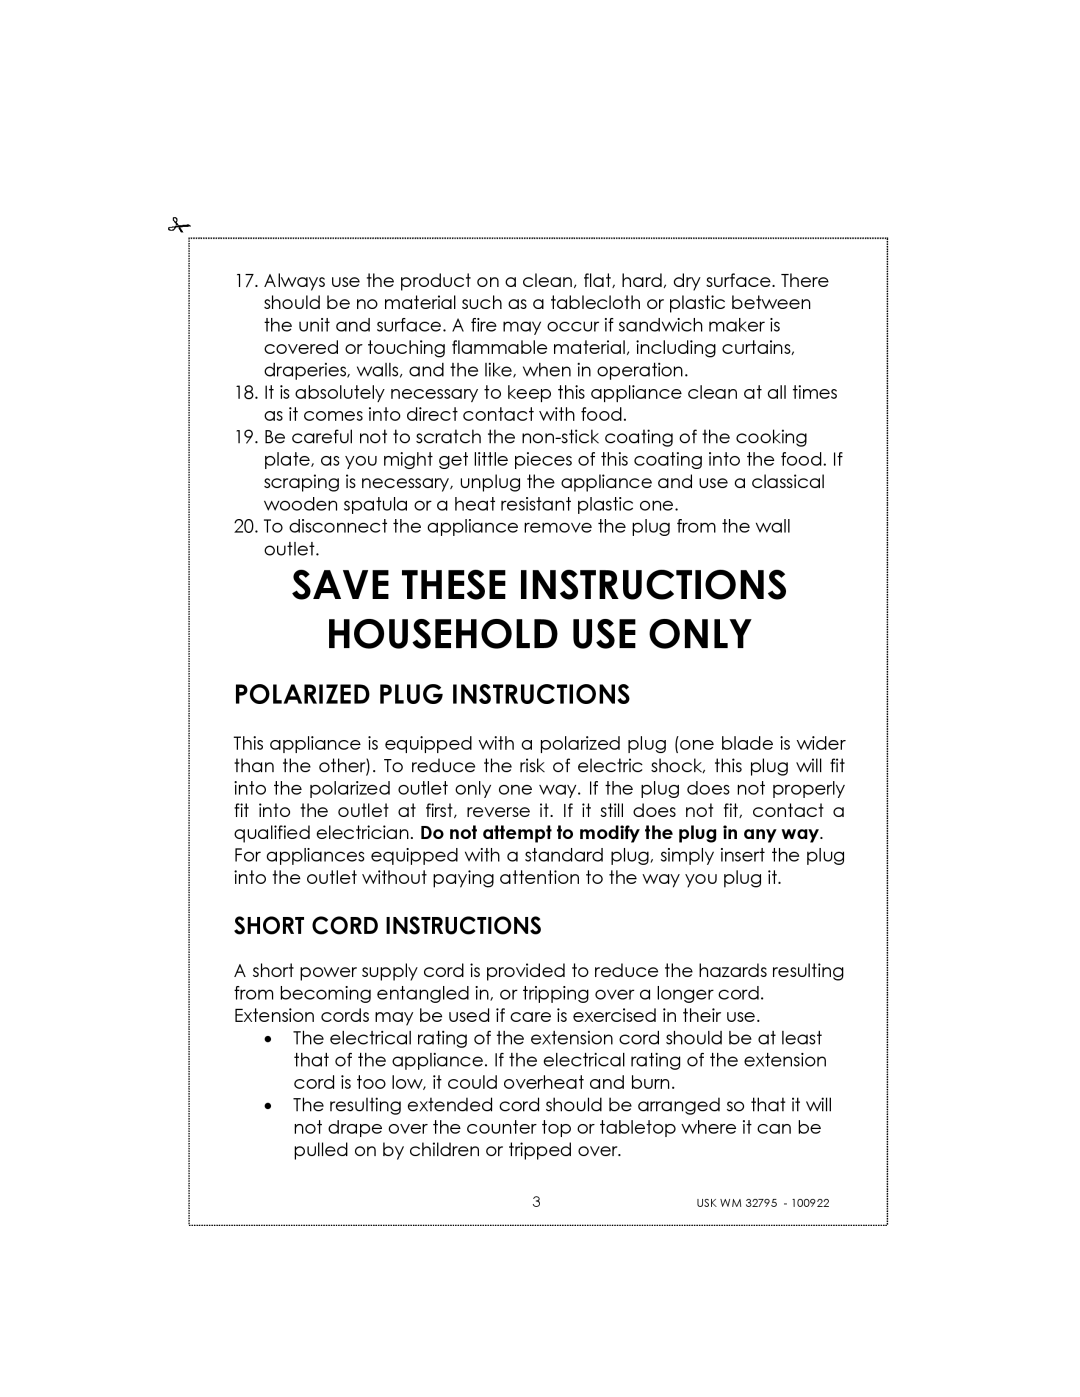 Kalorik USK WM 32795 Save These Instructions Household Use Only, Polarized Plug Instructions, Short Cord Instructions 